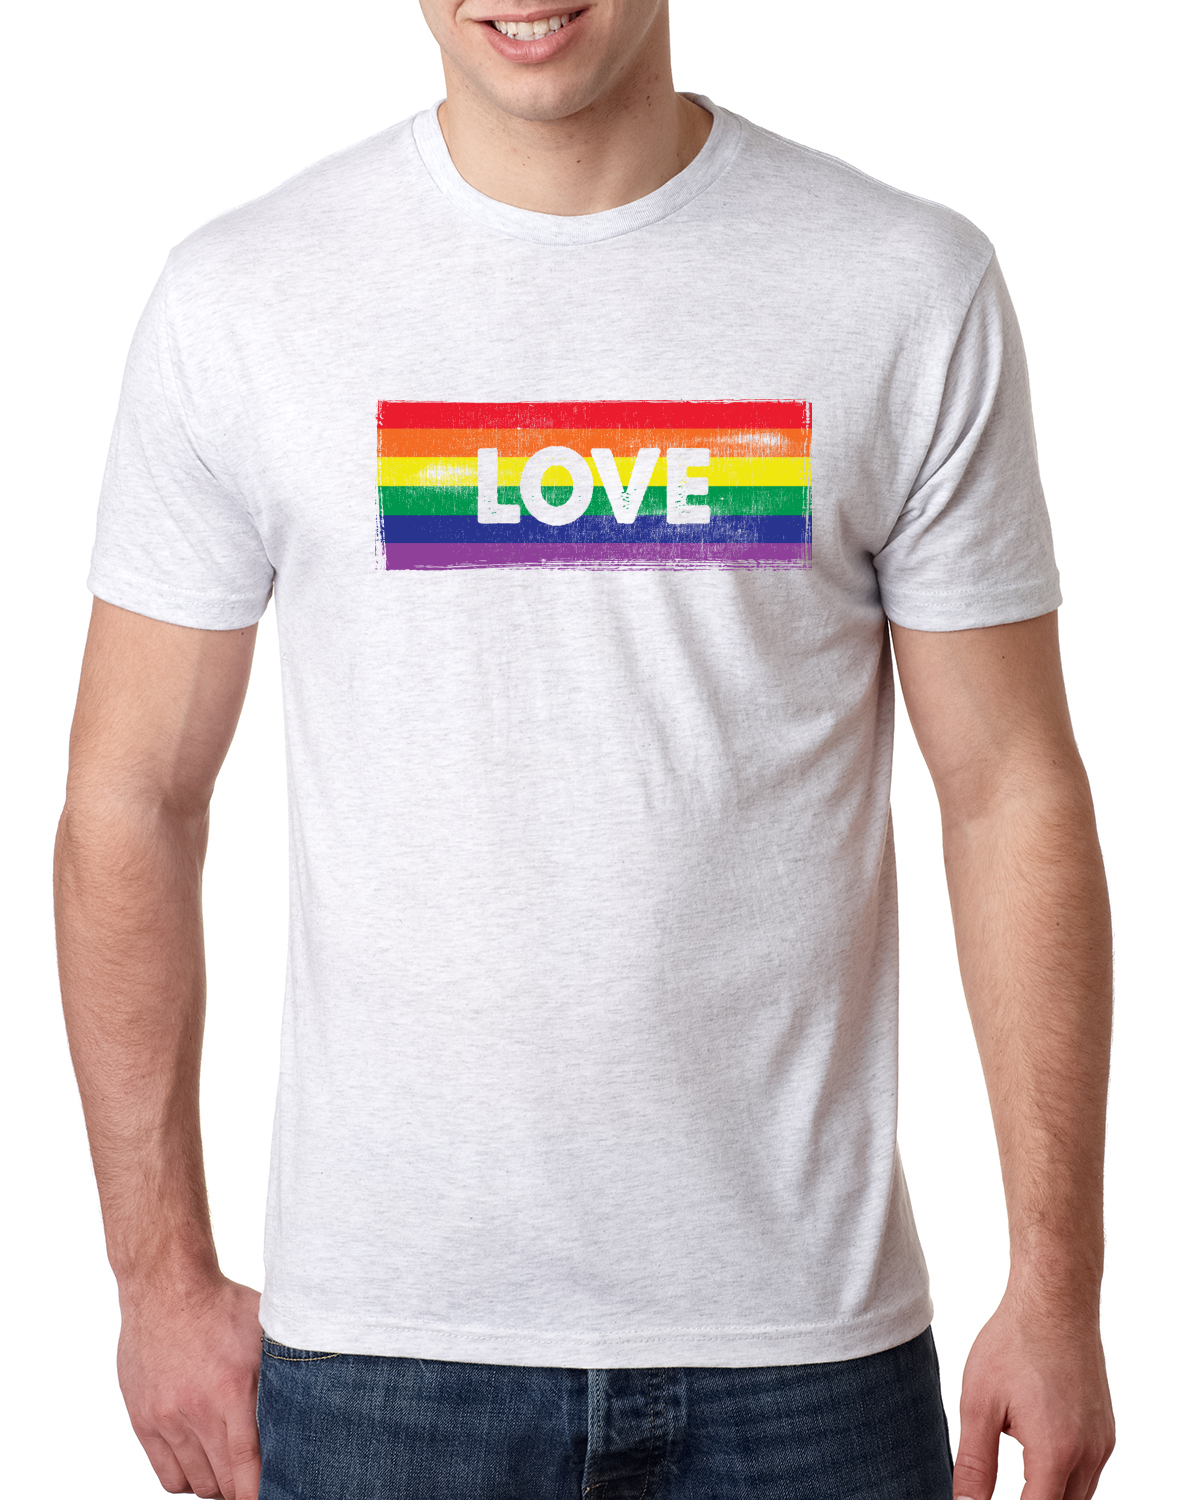 gay pride shirts target